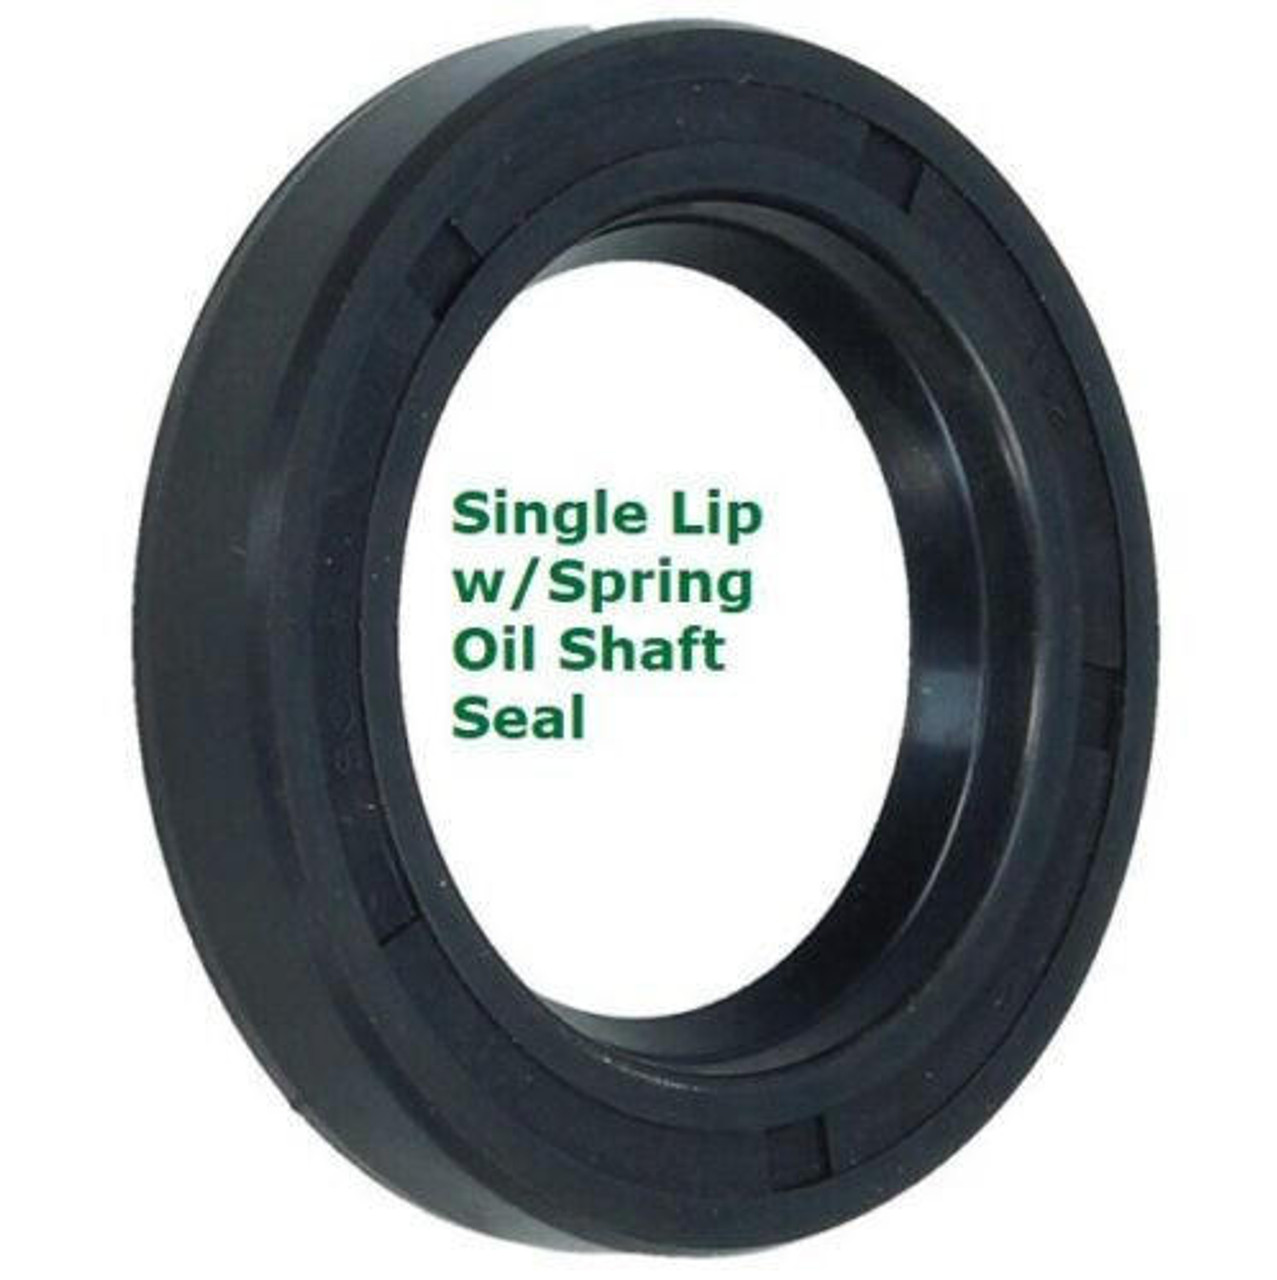 Metric Oil Shaft Seal 210 x 250 x 15mm   Single Lip   Price for 1 pc